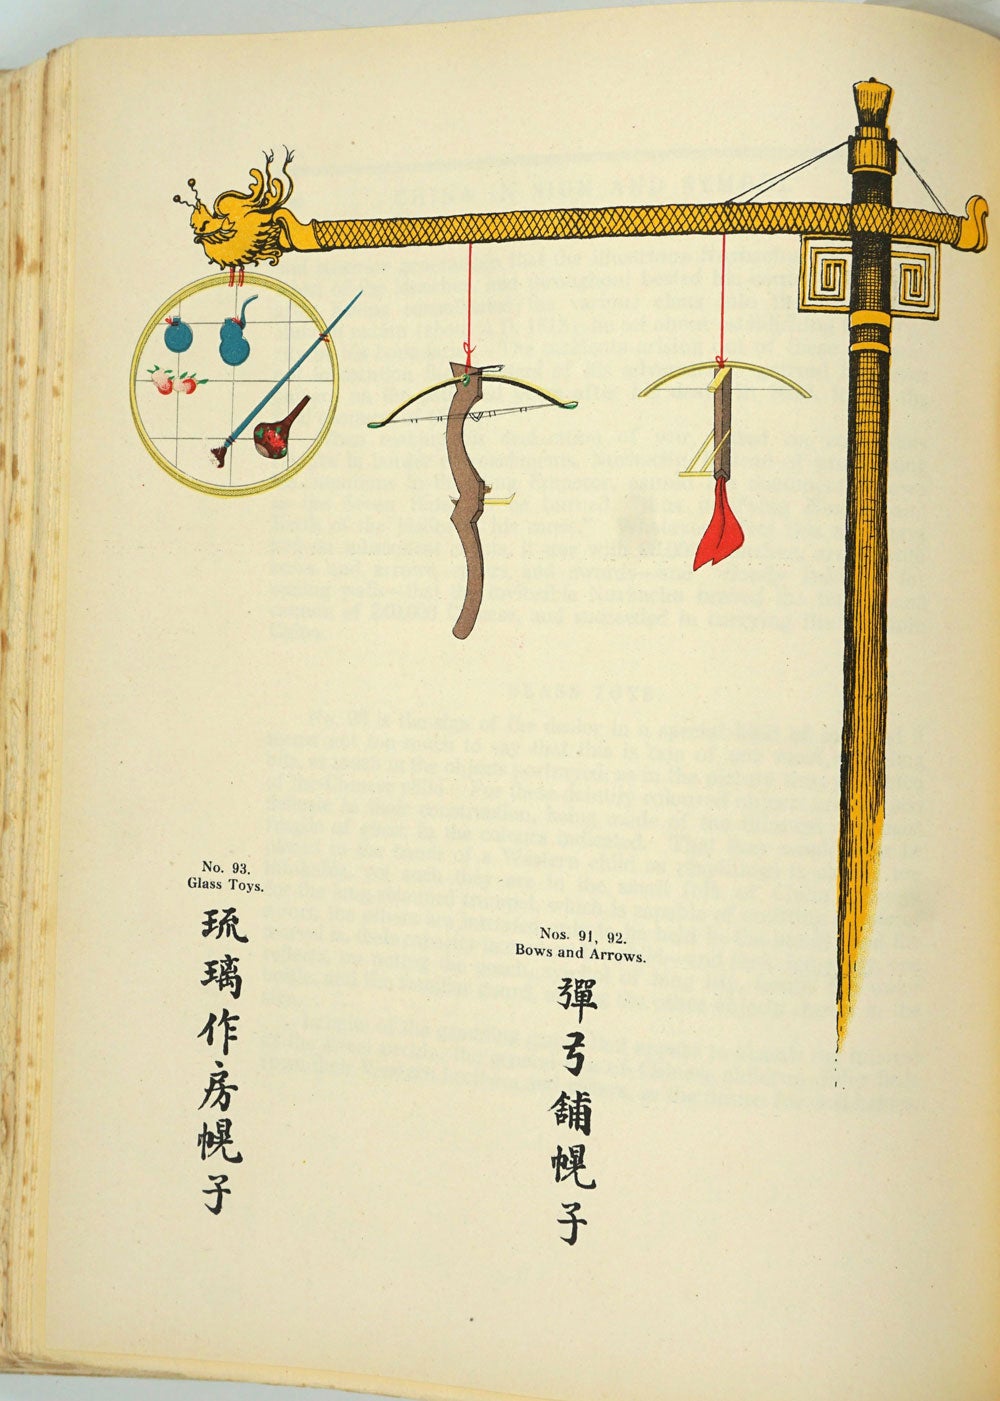 China in Sign and Symbol, KENT CRANE, Louise Crane